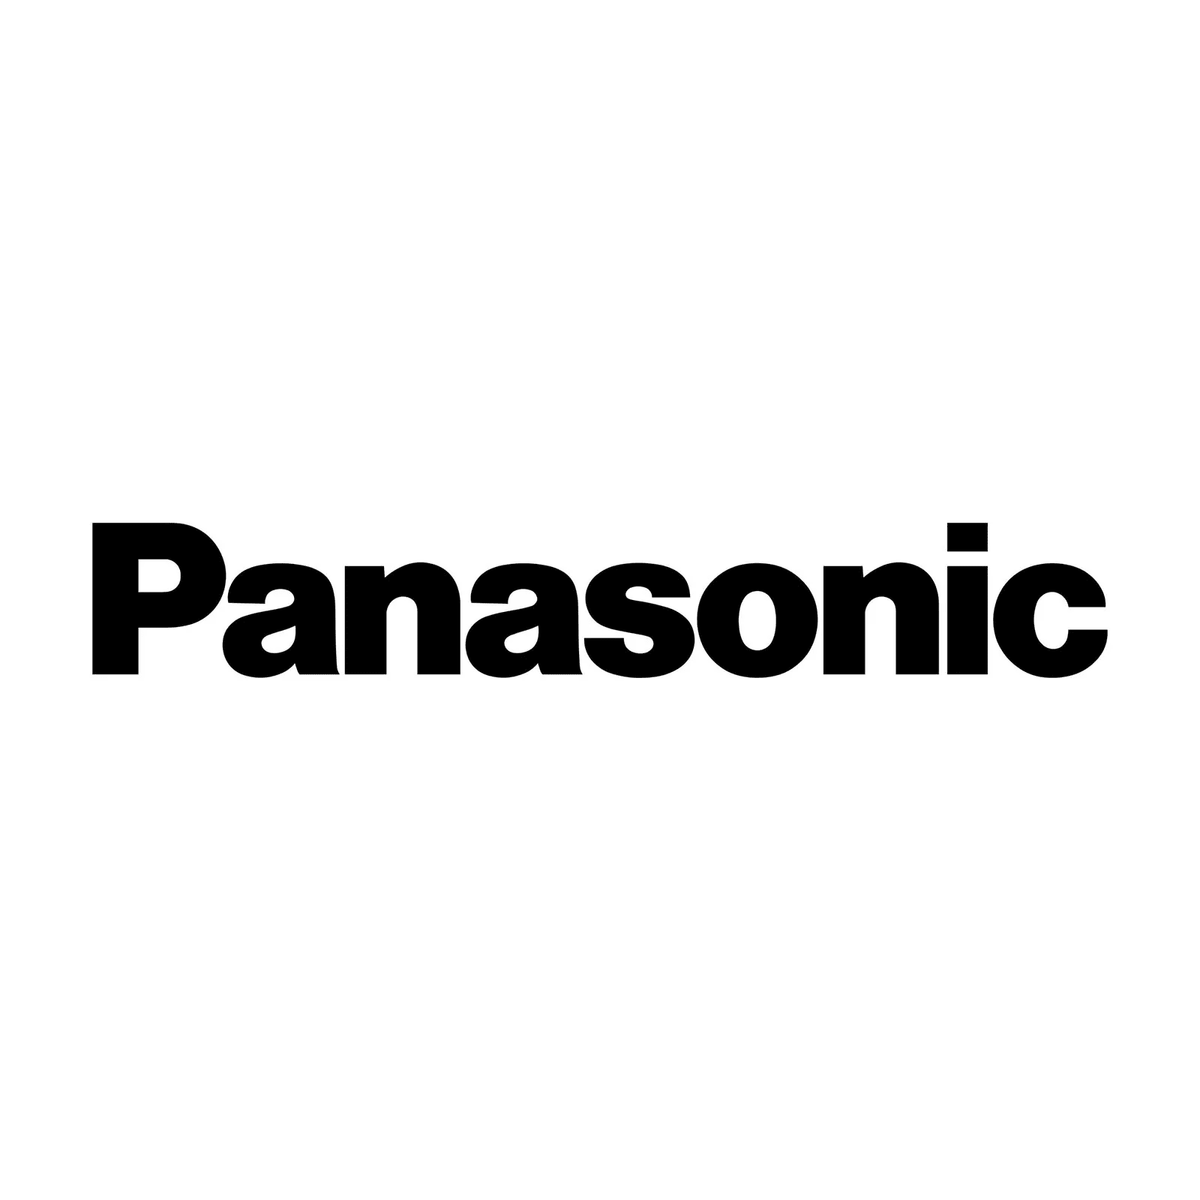 Panasonic products at JDS DIY